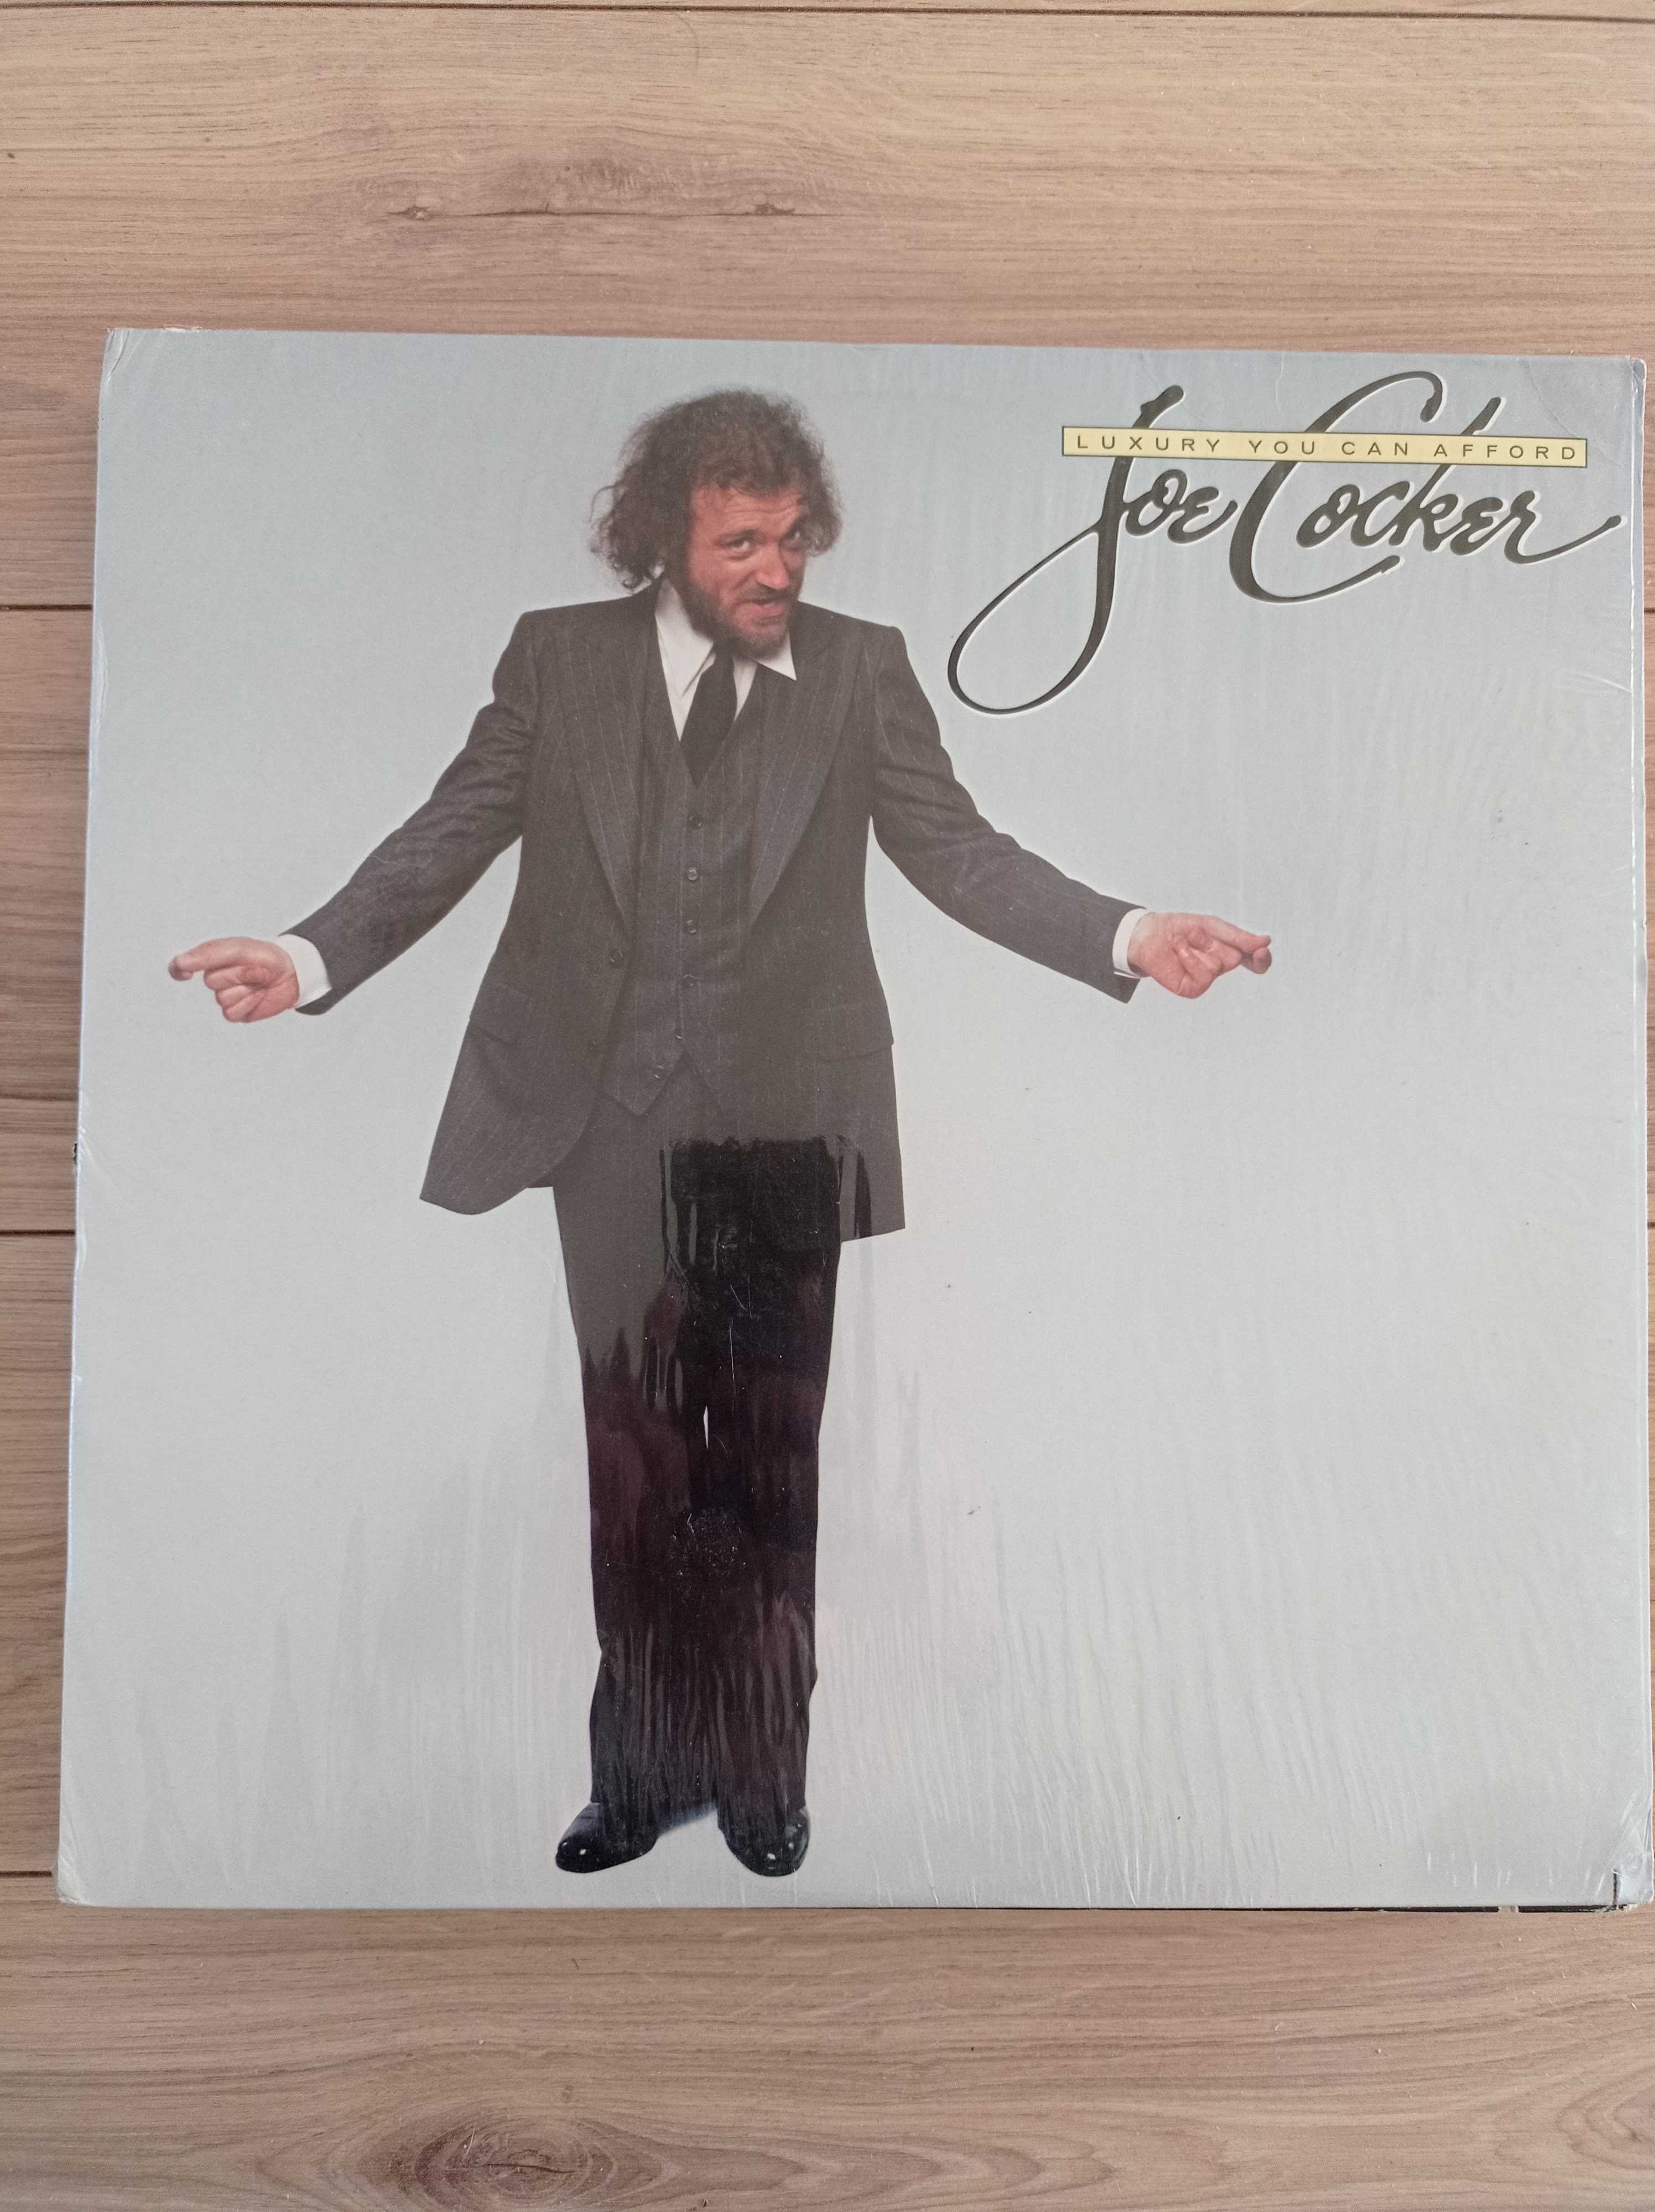 Vinyl/vinil Joe Cocker - Luxury you can afford - Asylum 1978 USA